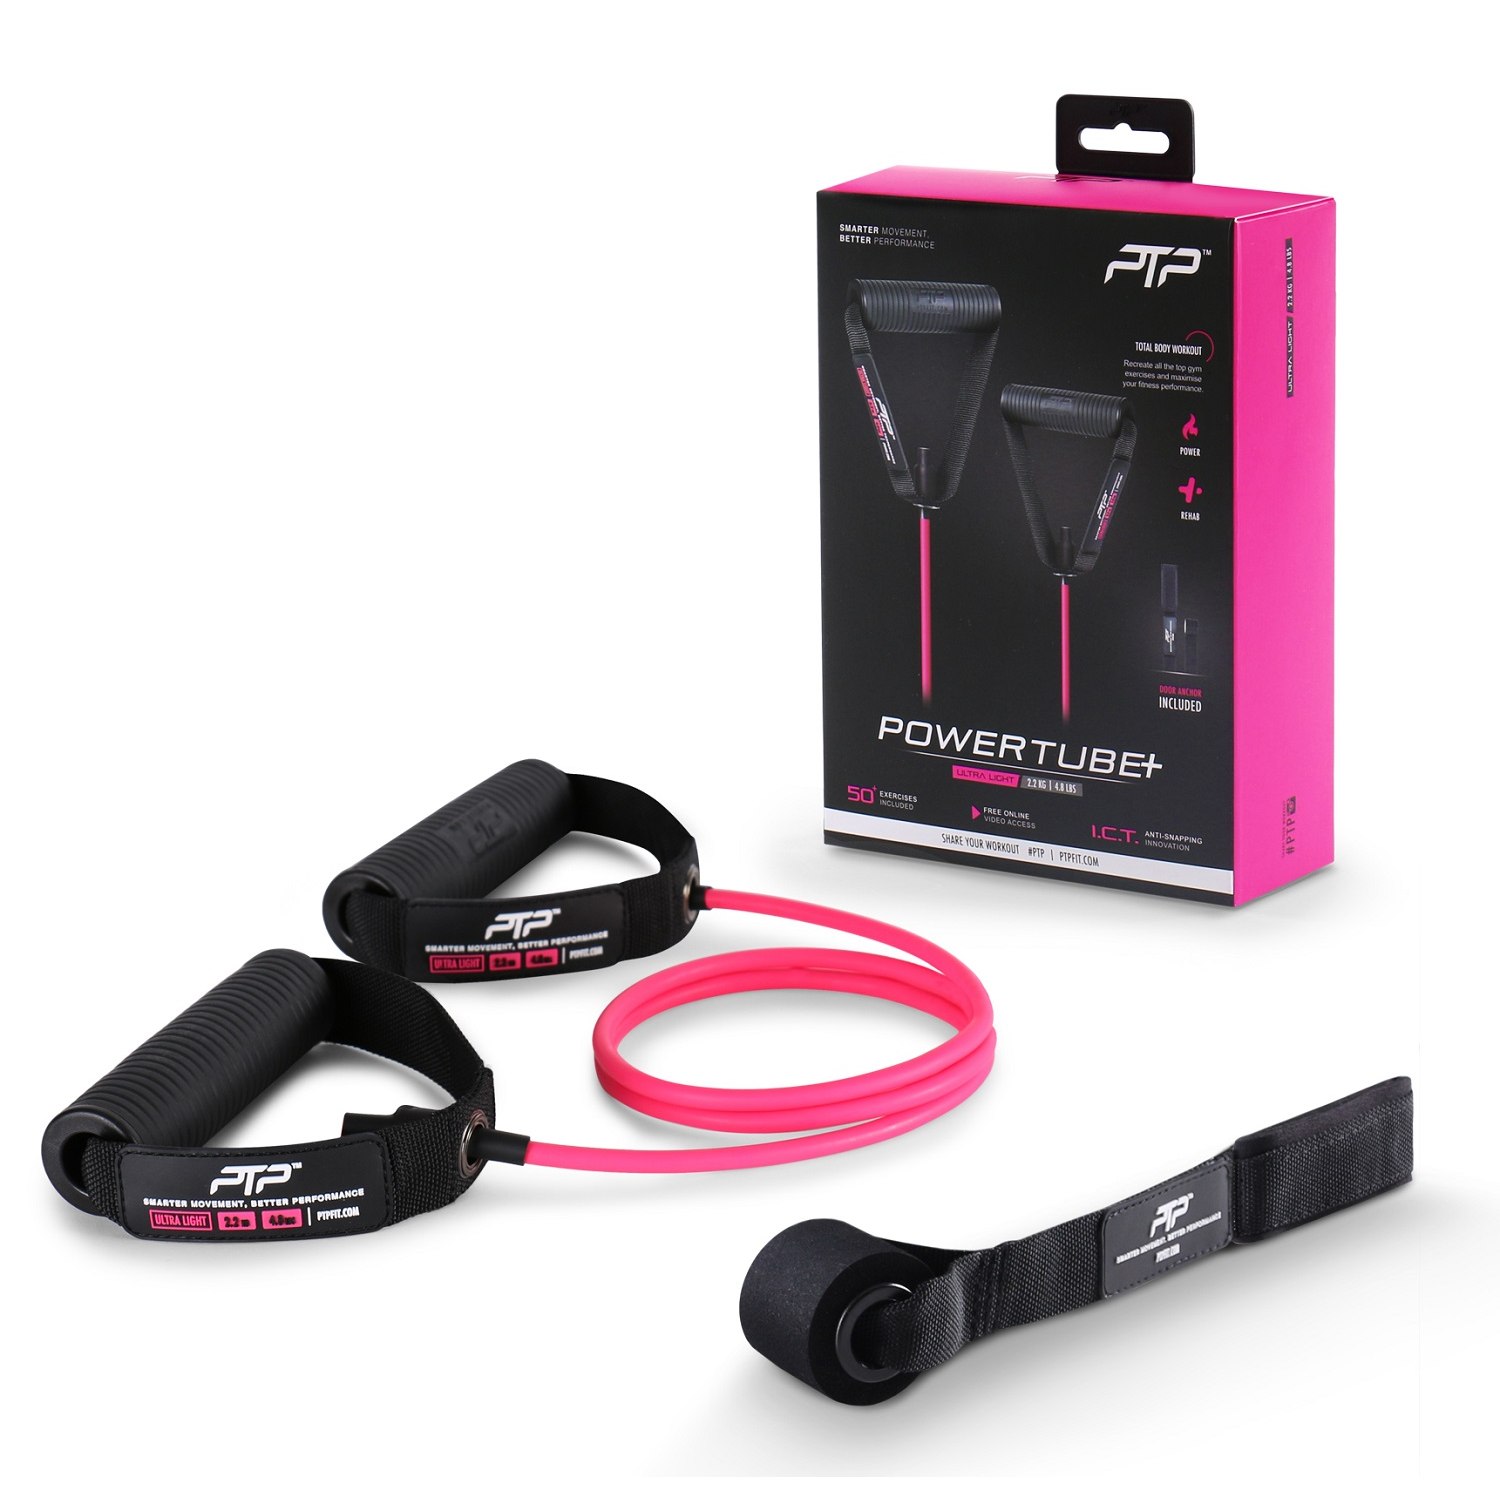 Productfoto van PTP PowerTube+ Ultra Light Resistance Band - pink